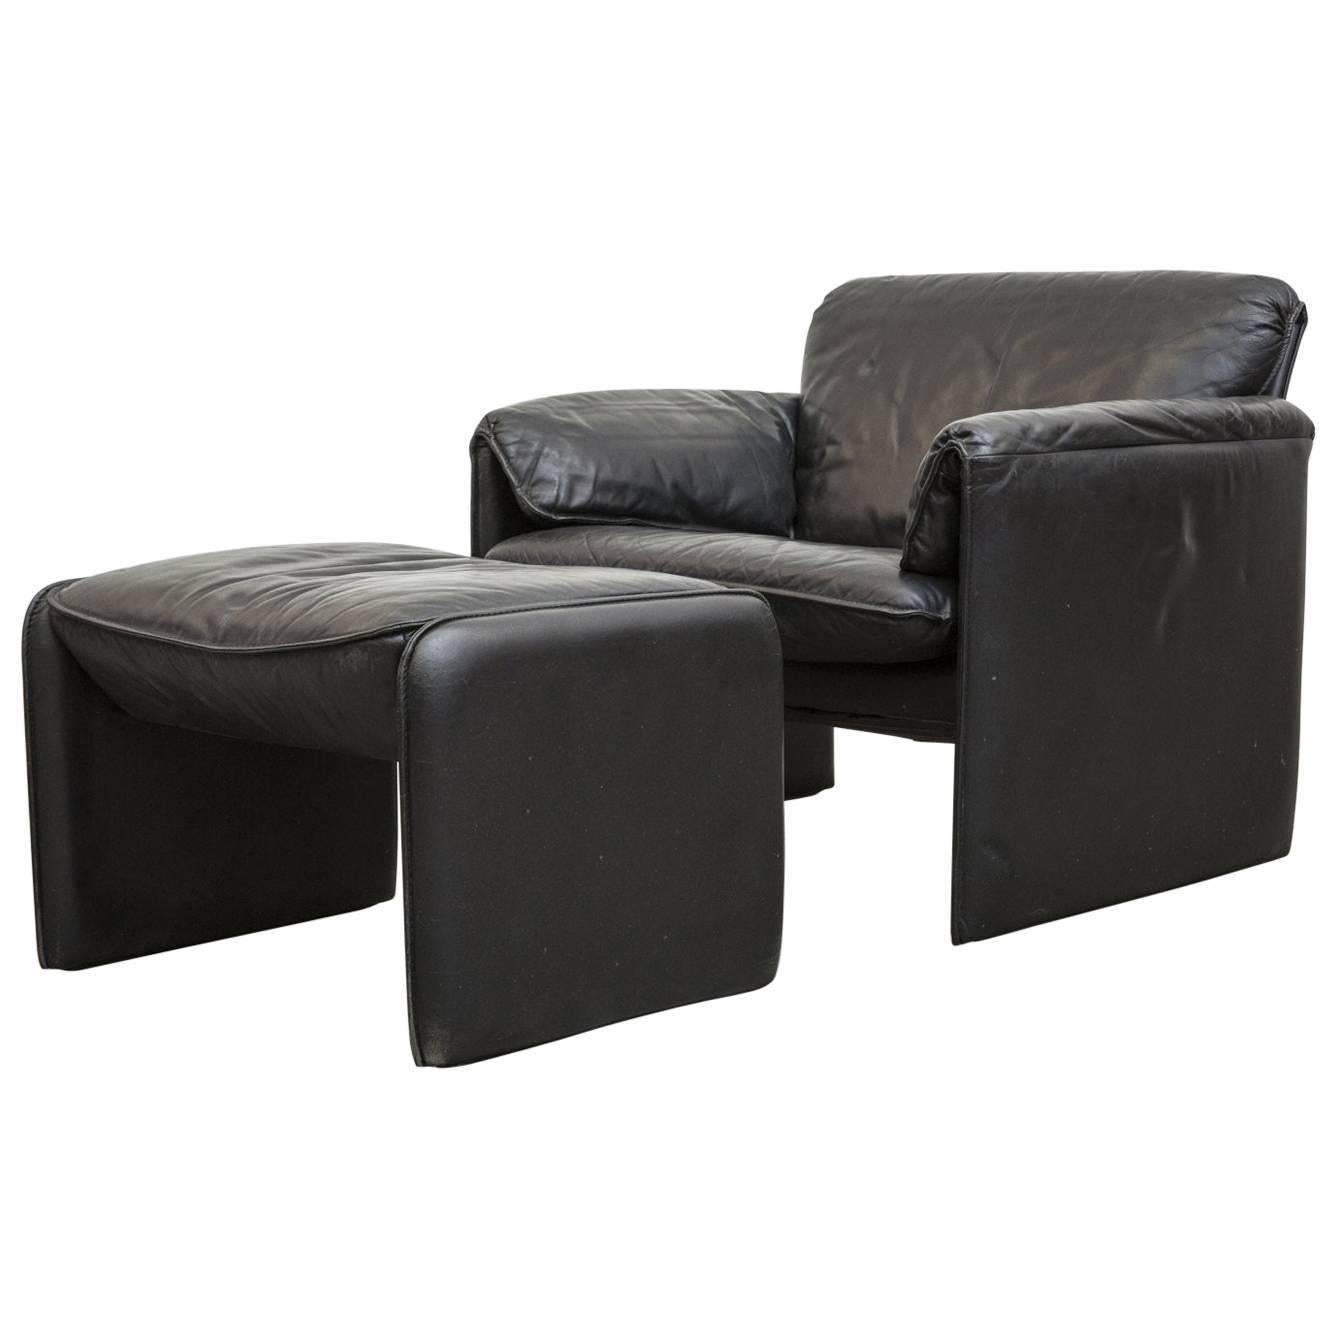 Leolux Bora Bora Leather Lounge Chair and Ottoman